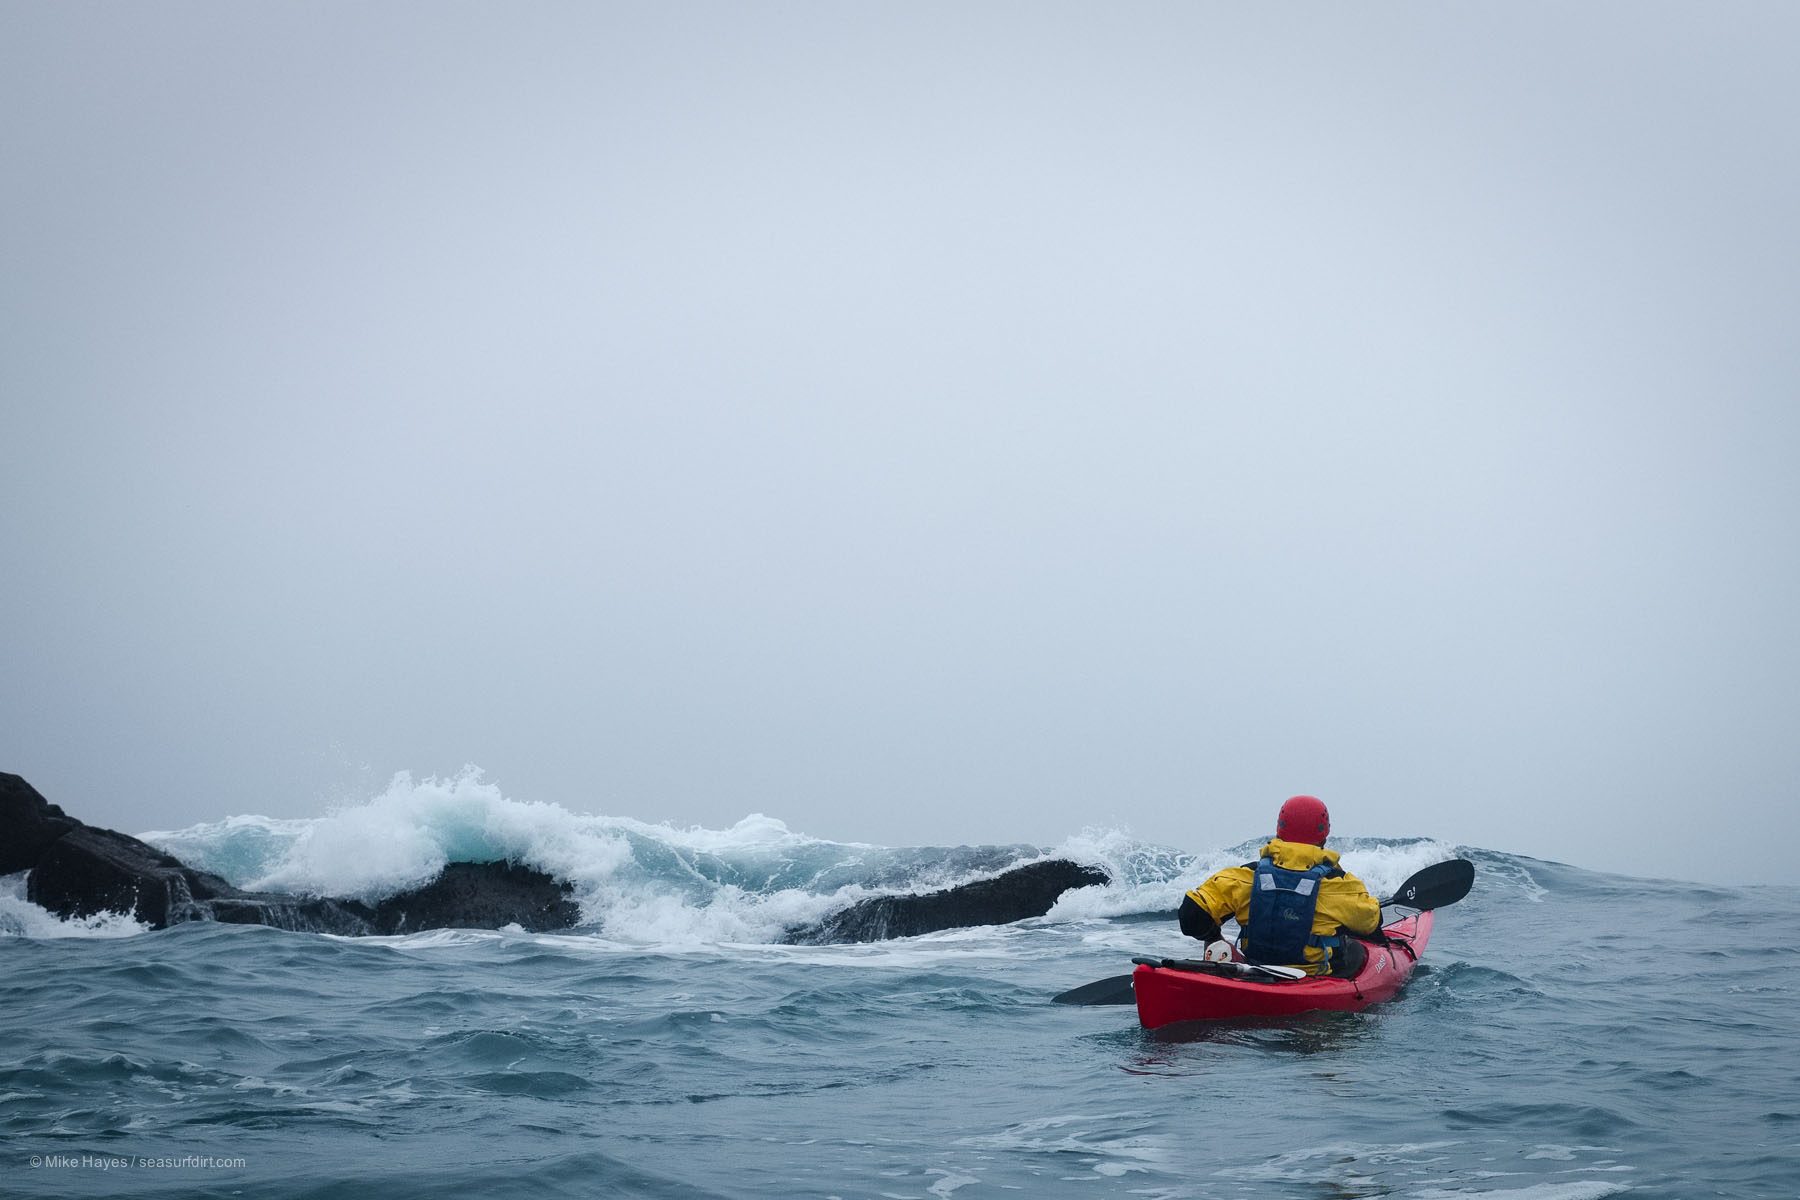 Sea kayaking in rough winter weather in Cornwall